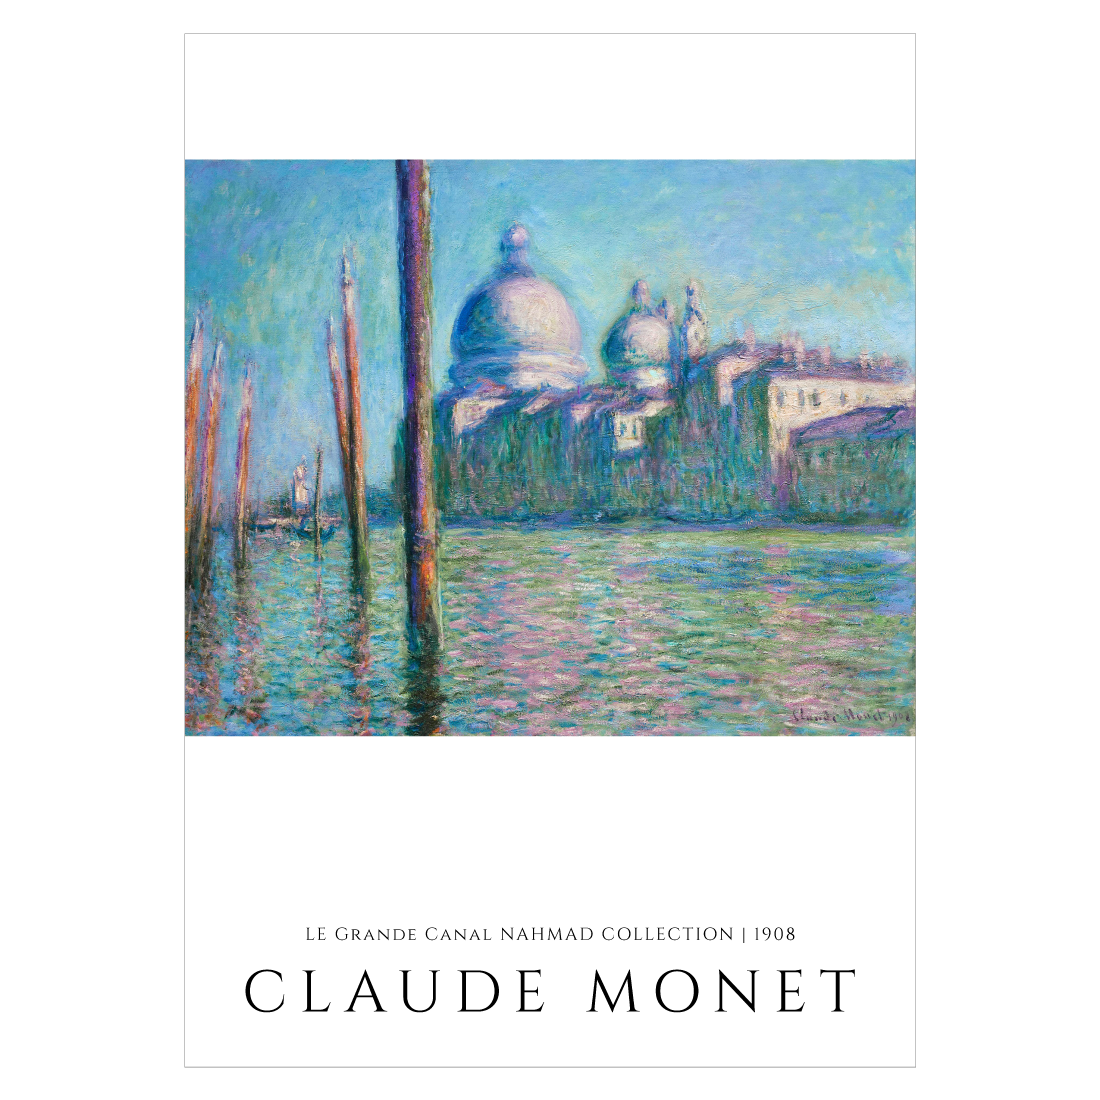 Kunstplakat med Claude Monet "Le Grand Canal Nahmad"